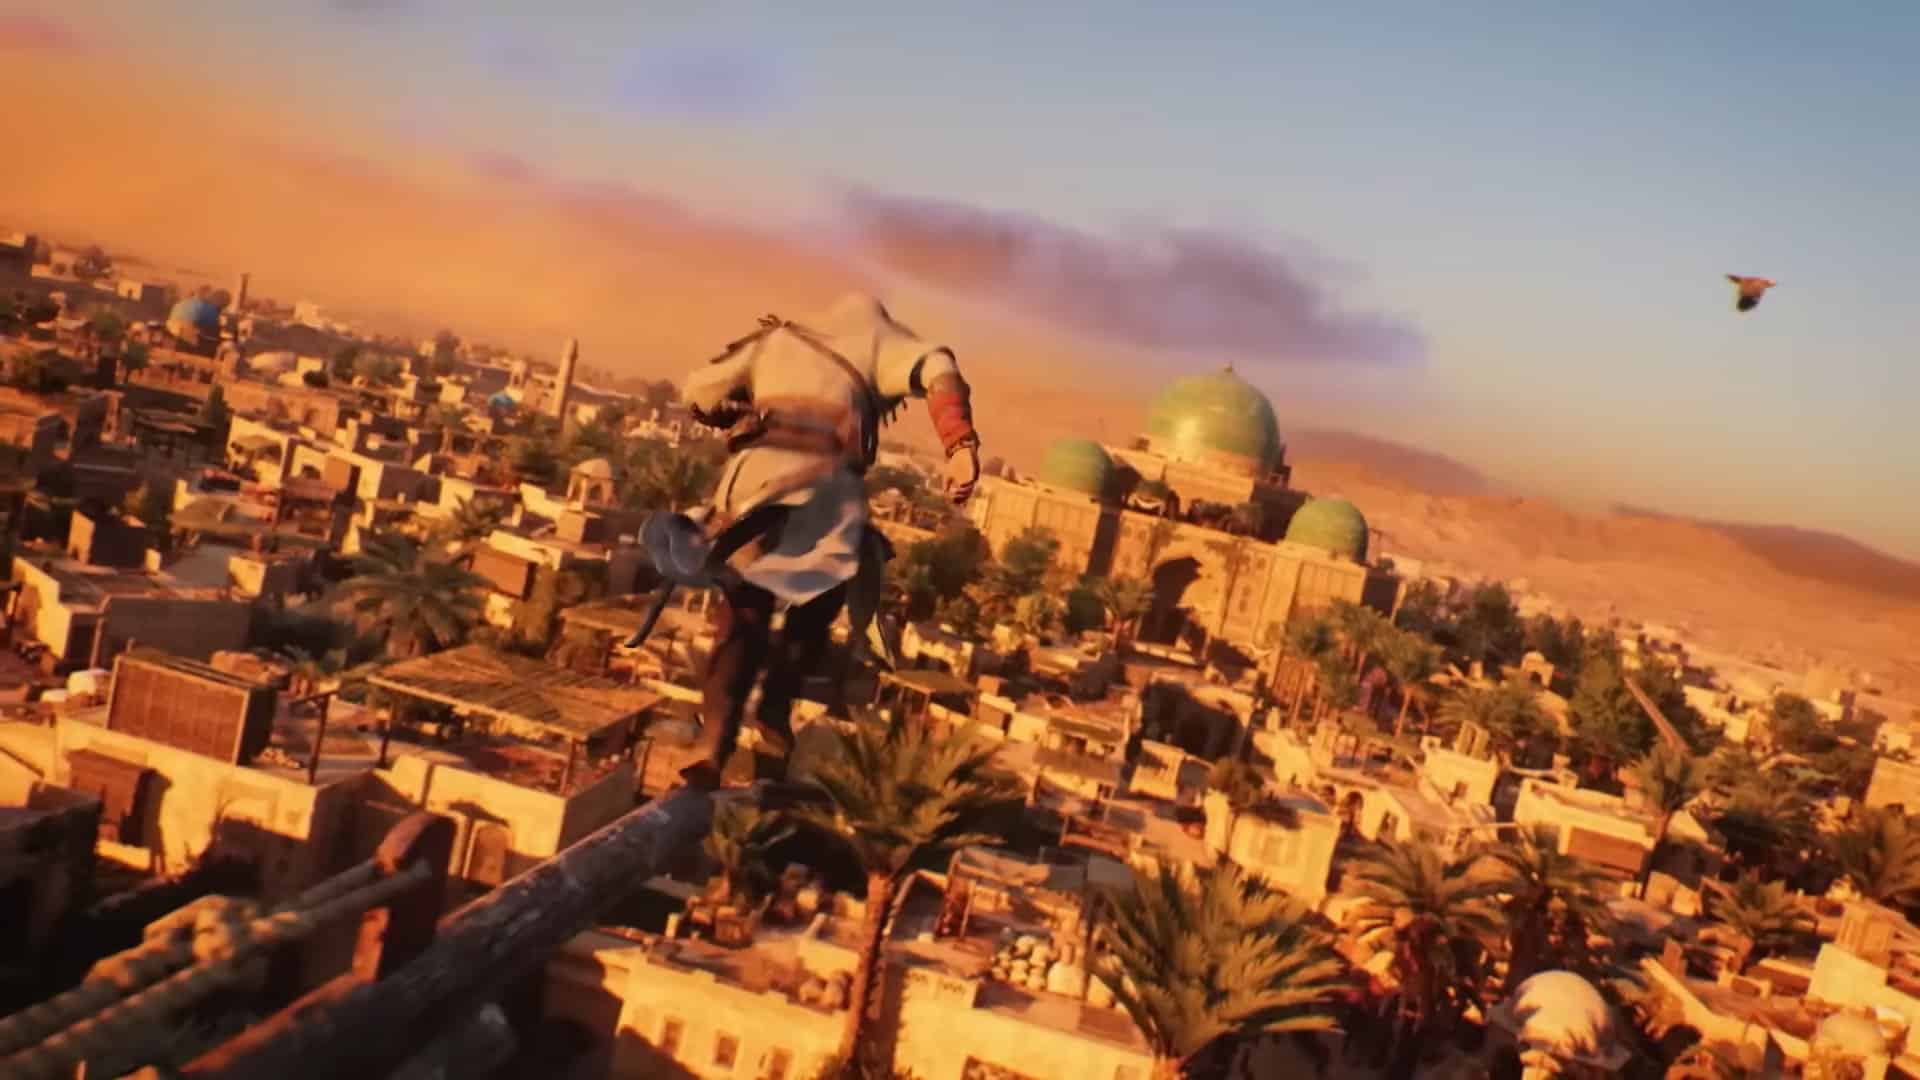 Assassin's Creed, Final Trailer [HD]